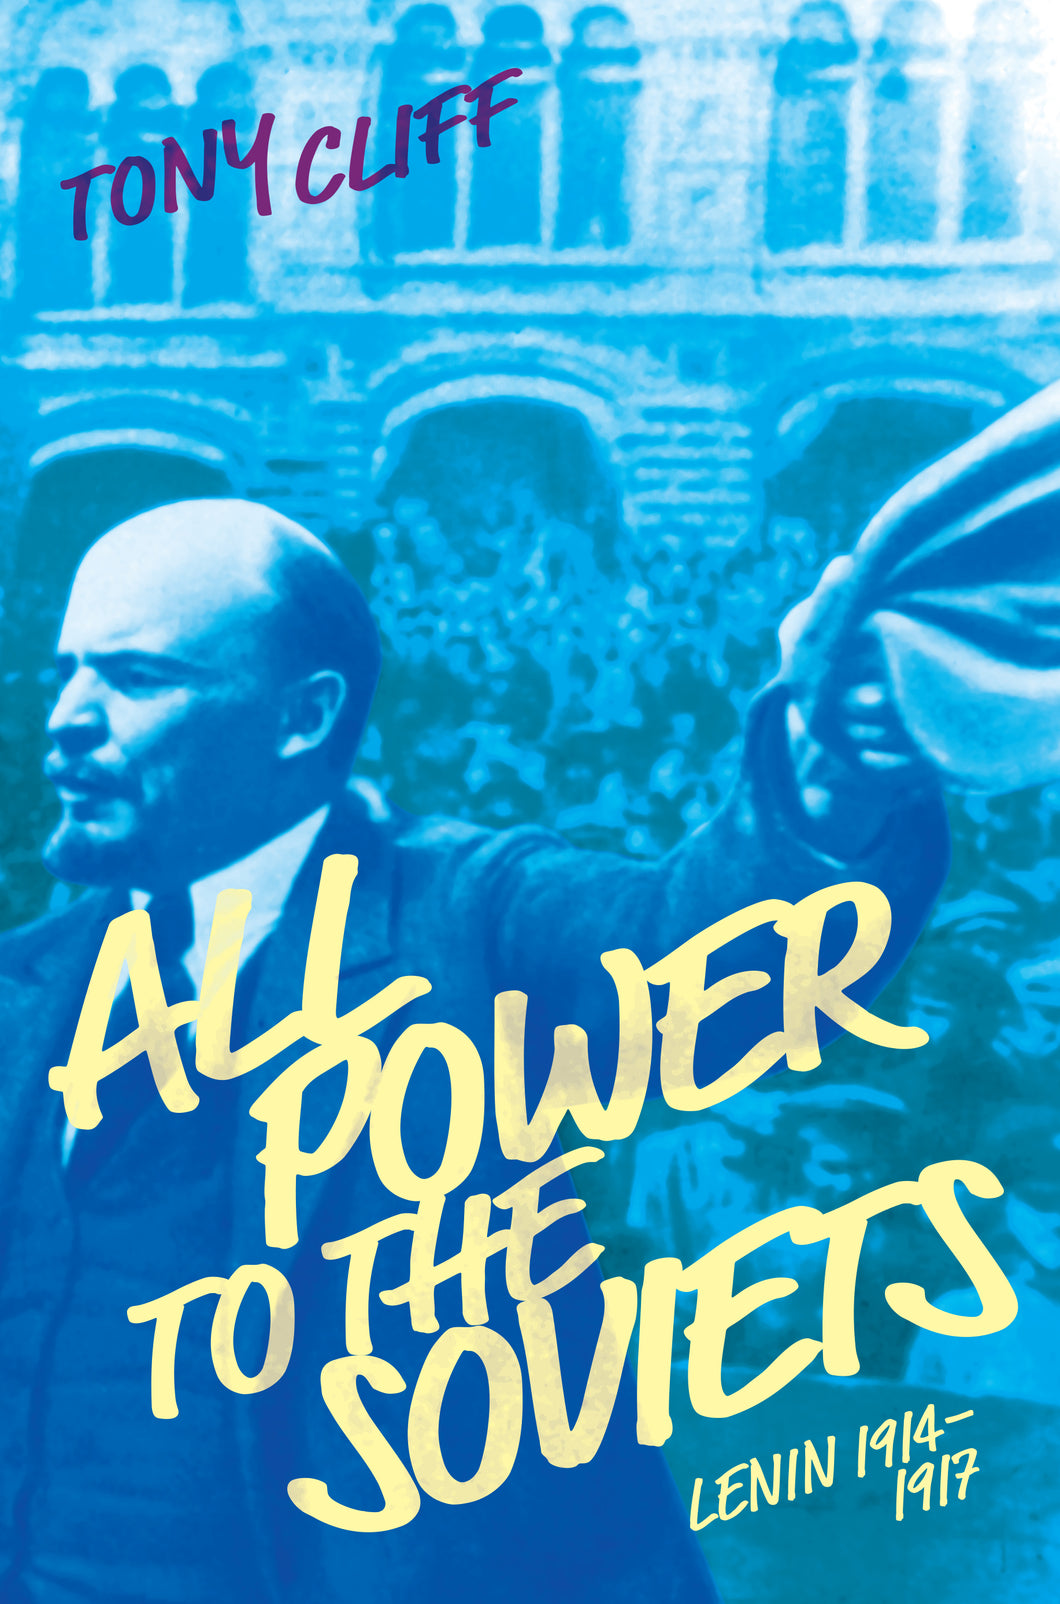 All Power to the Soviets: Lenin 1914-1917 (Vol. 2)